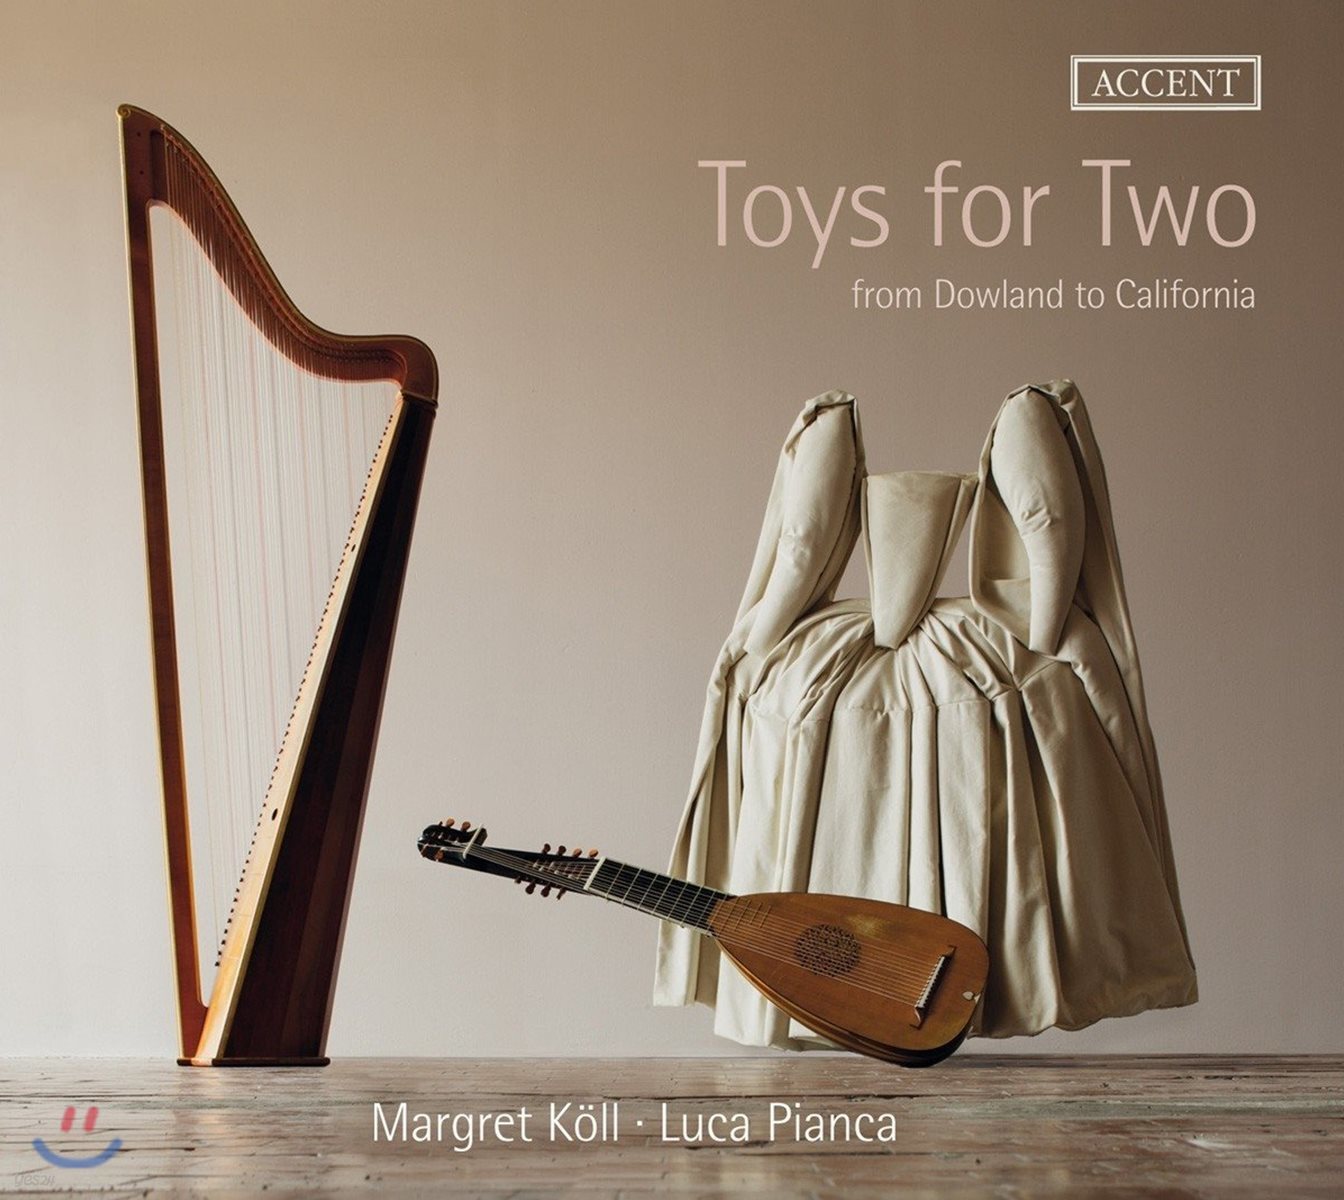 Margret Koll / Luca Pianca 하프와 류트를 위한 다양한 음악 - 다울랜드 / 버드 / 레드 제플린 외 (Toys for Two from Dowland to California)